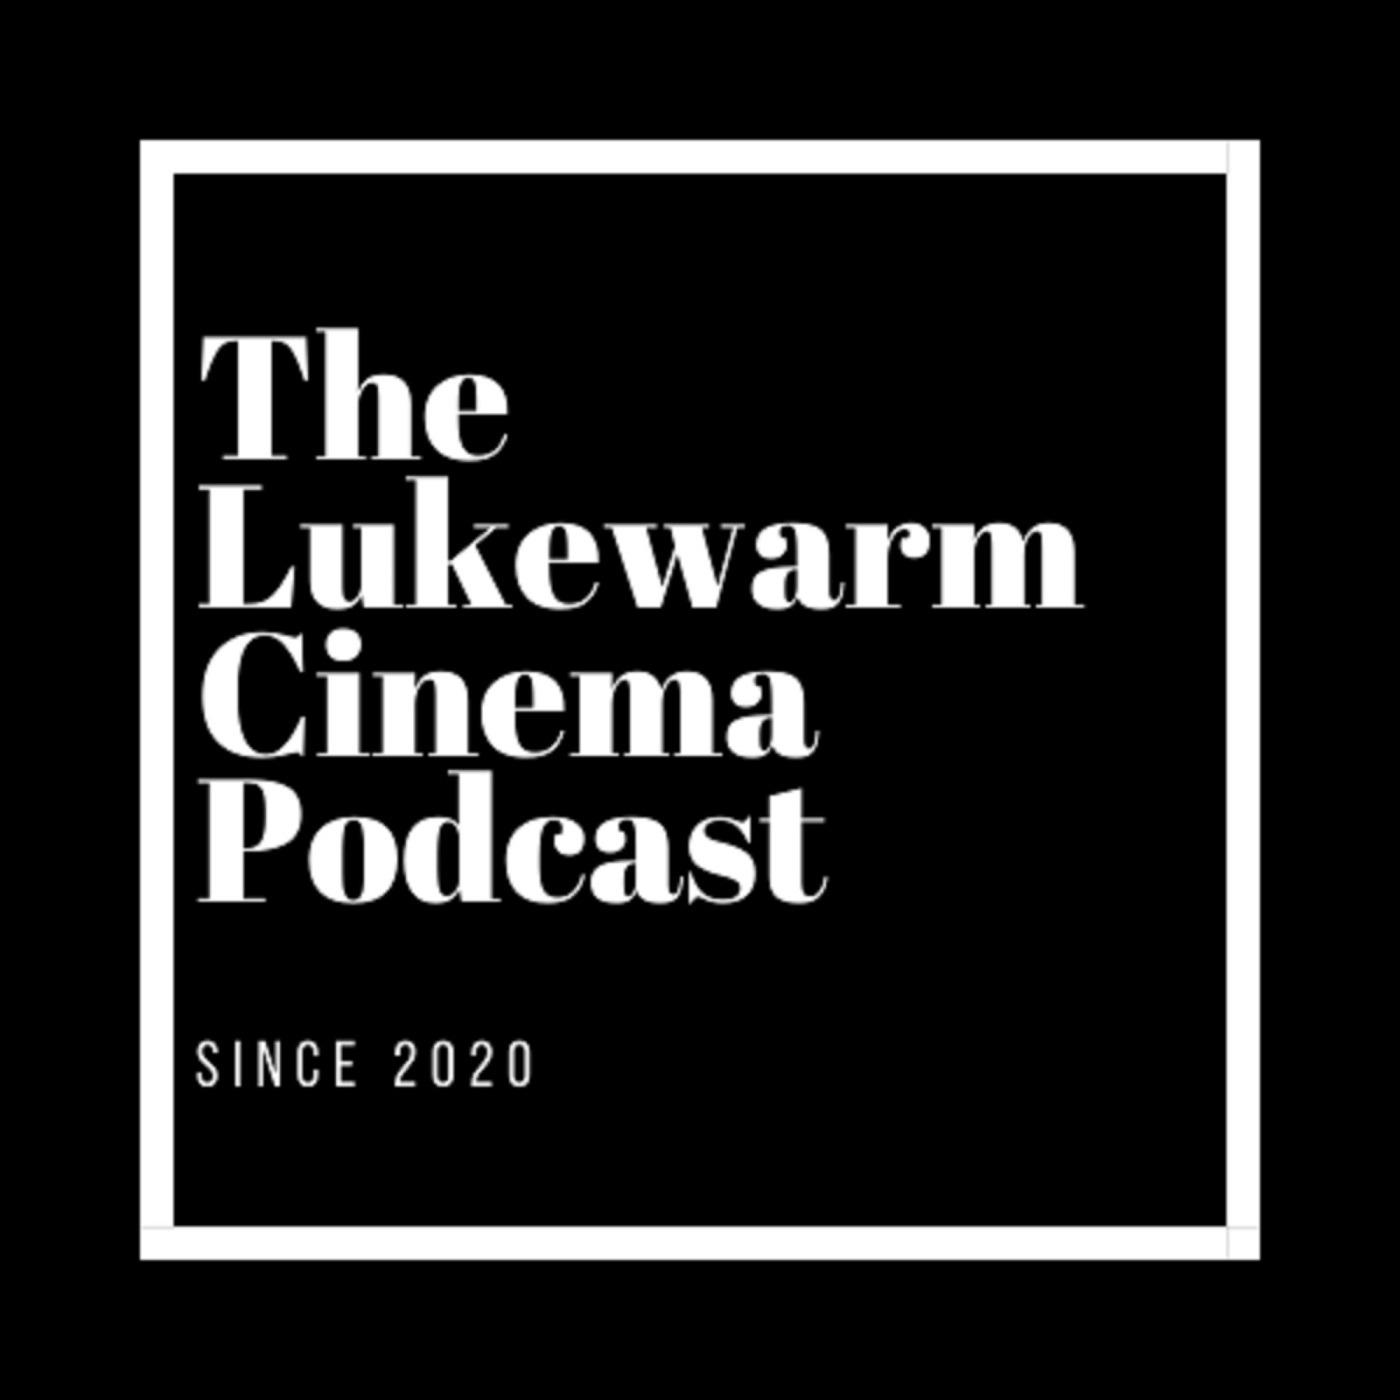 The Lukewarm Cinema Podcast